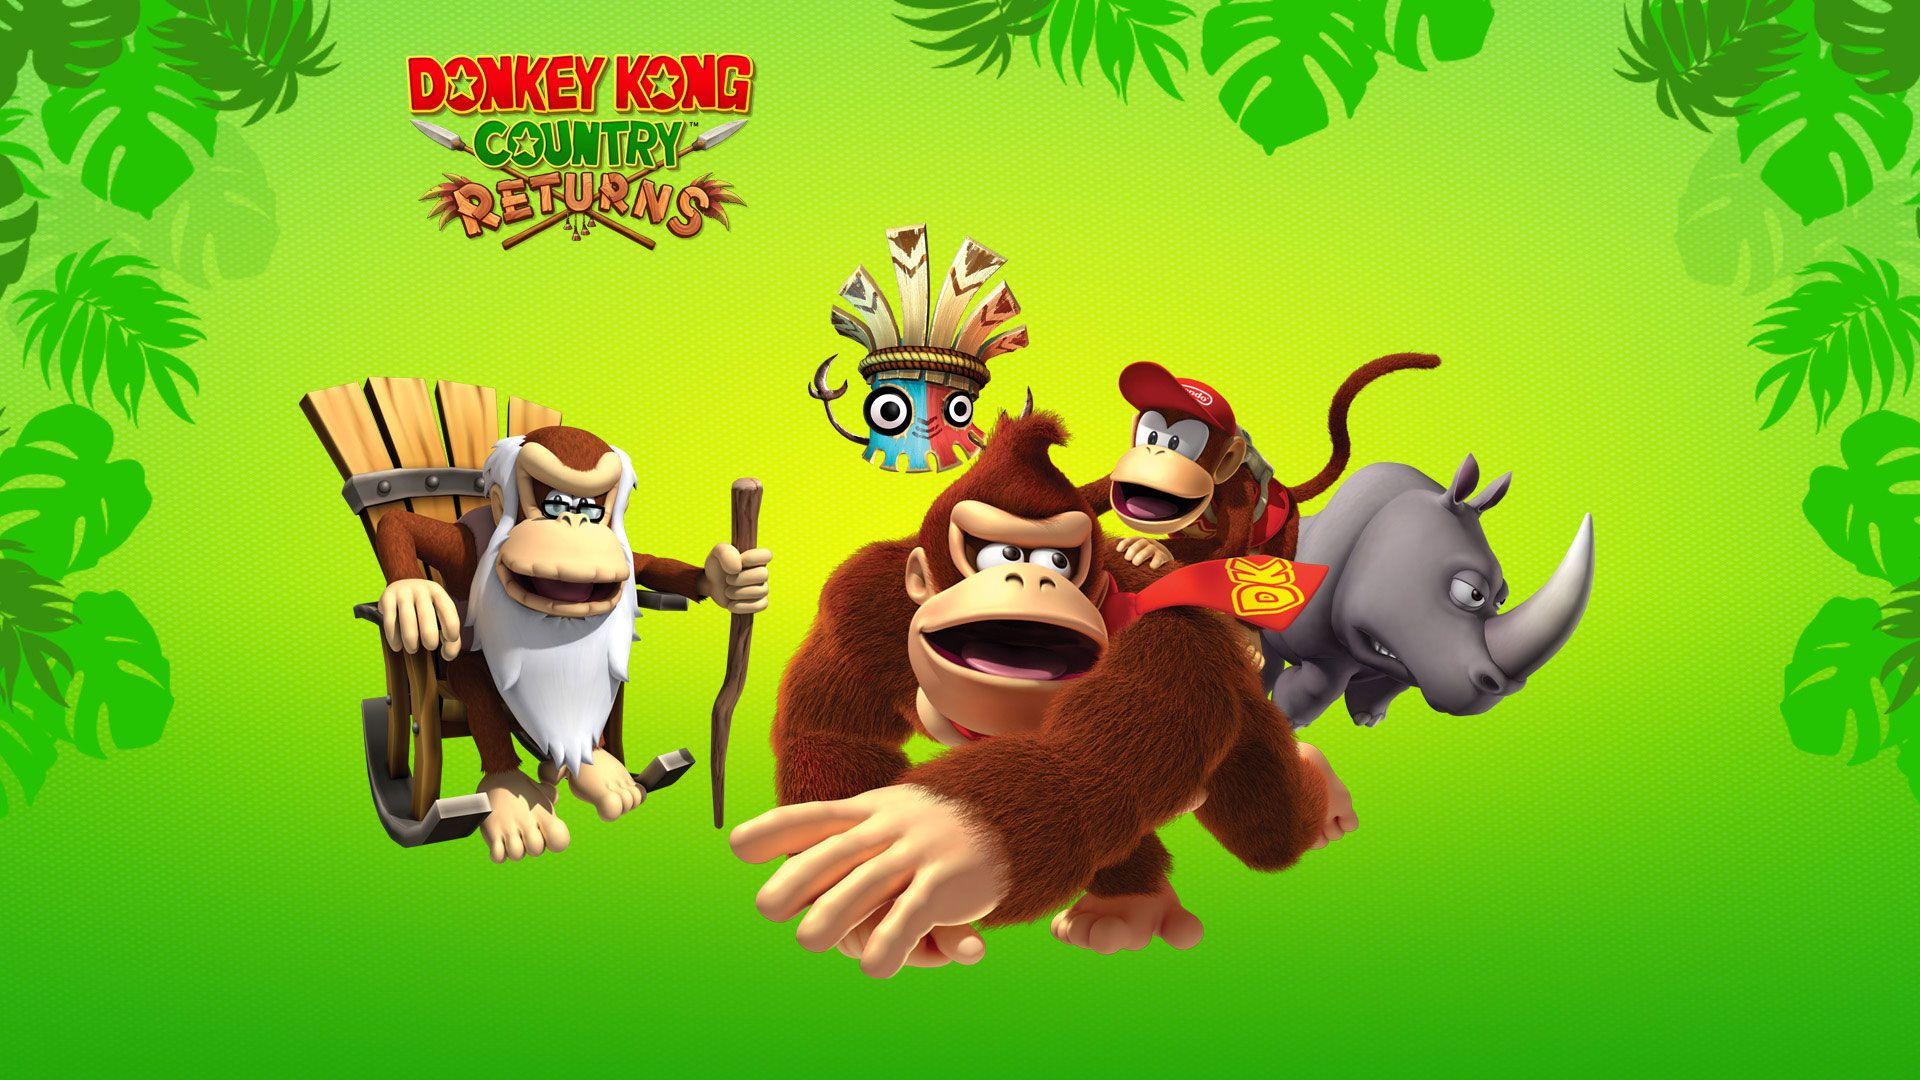 Donkey Kong Country Wallpaper Hd - Donkey kong country super nintendo ...